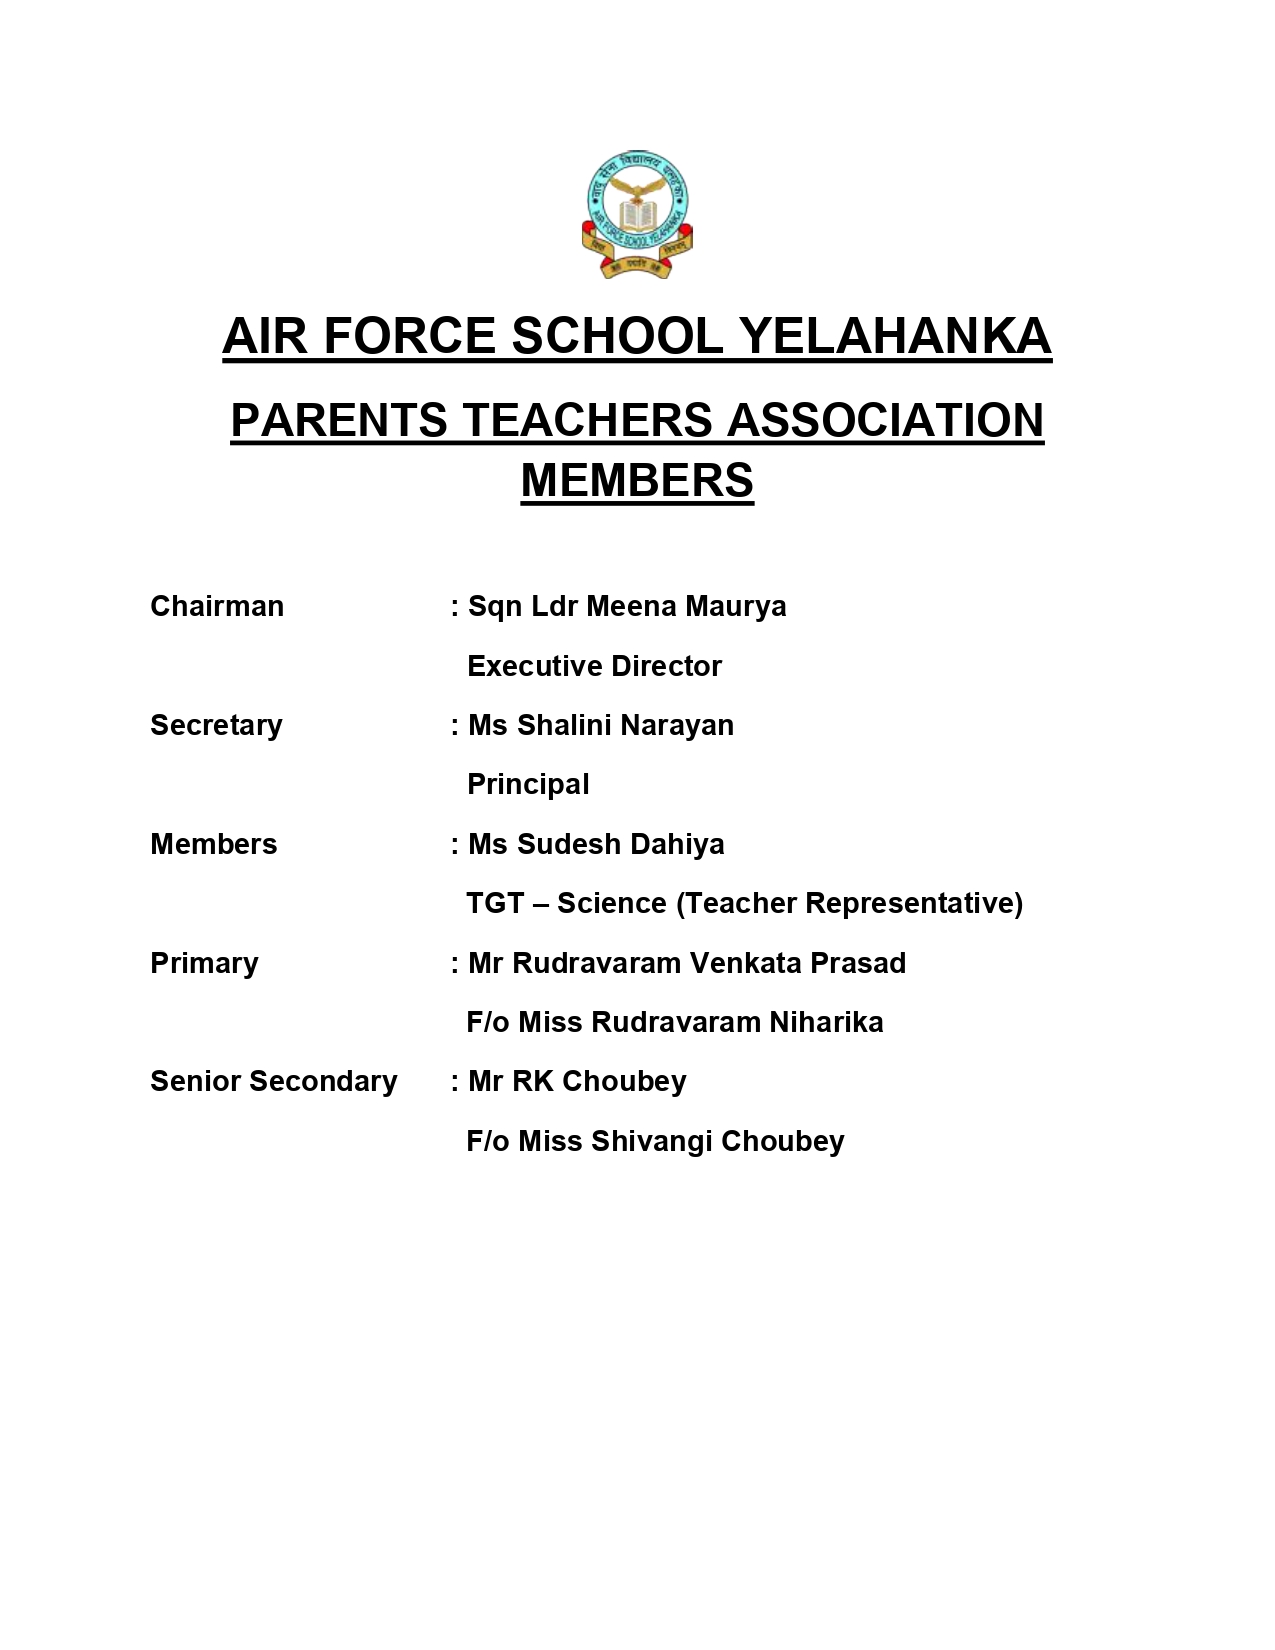 Air Force School Yelahanka, Bangalore